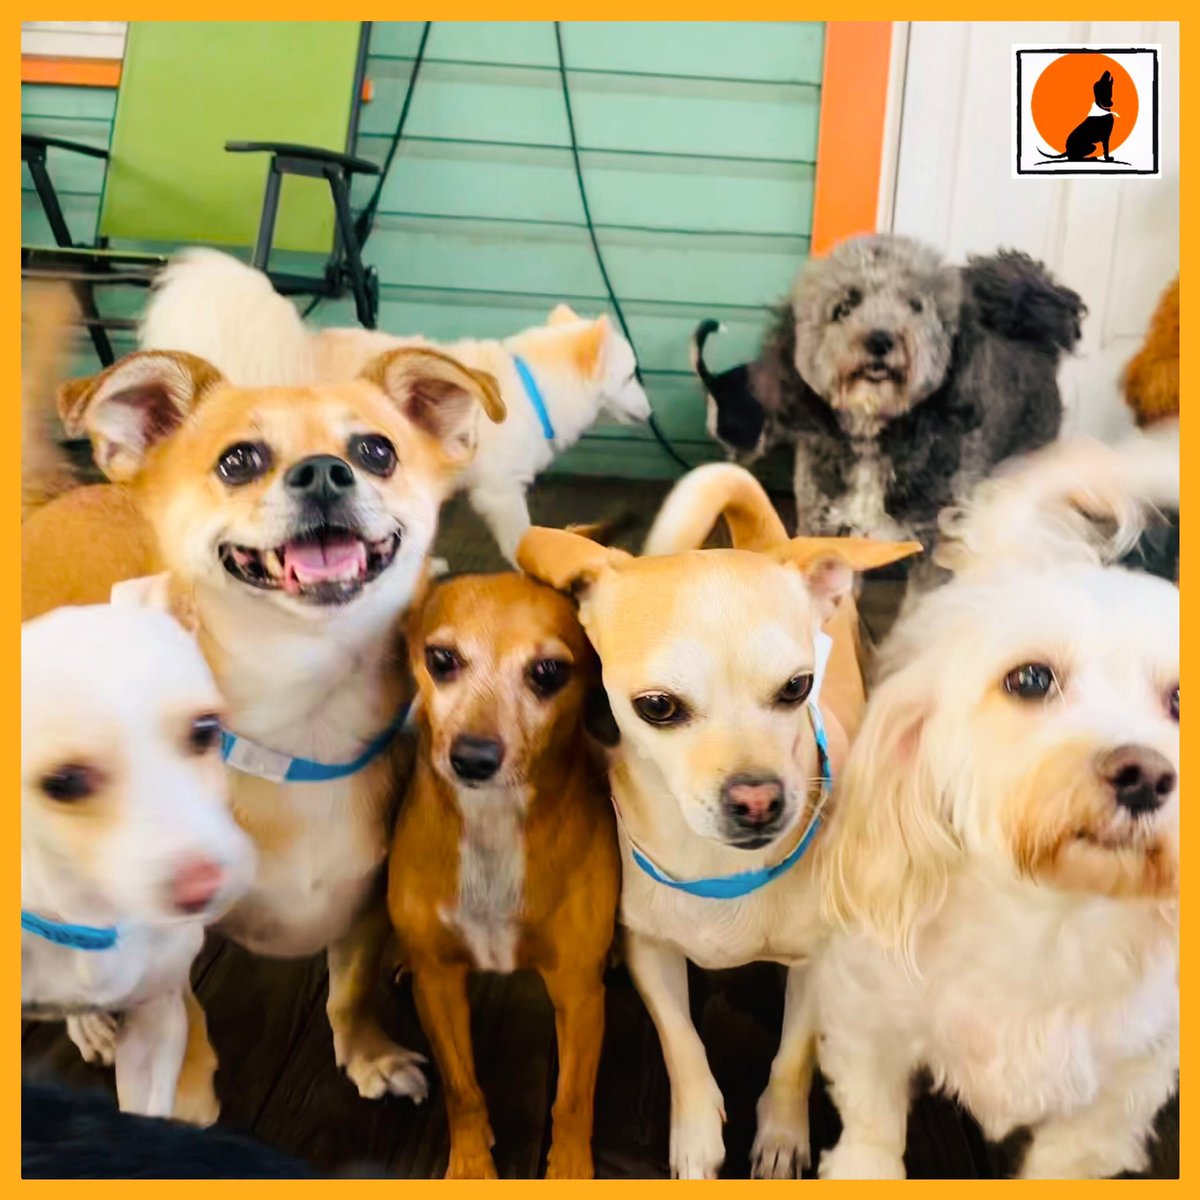 Group photo Day🐾
.
.
.
 #houstondogs #dogsofinstagram #dogsofhouston #houston #rescuedog #instadog #dogstagram #dog #dogs #puppiesofinstagram #puppy #htx #texas #rescuedogsofinstagram #dogoftheday #doglover #htown #dogsoftexas #dogsofinsta #adoptdontshop #houstondog